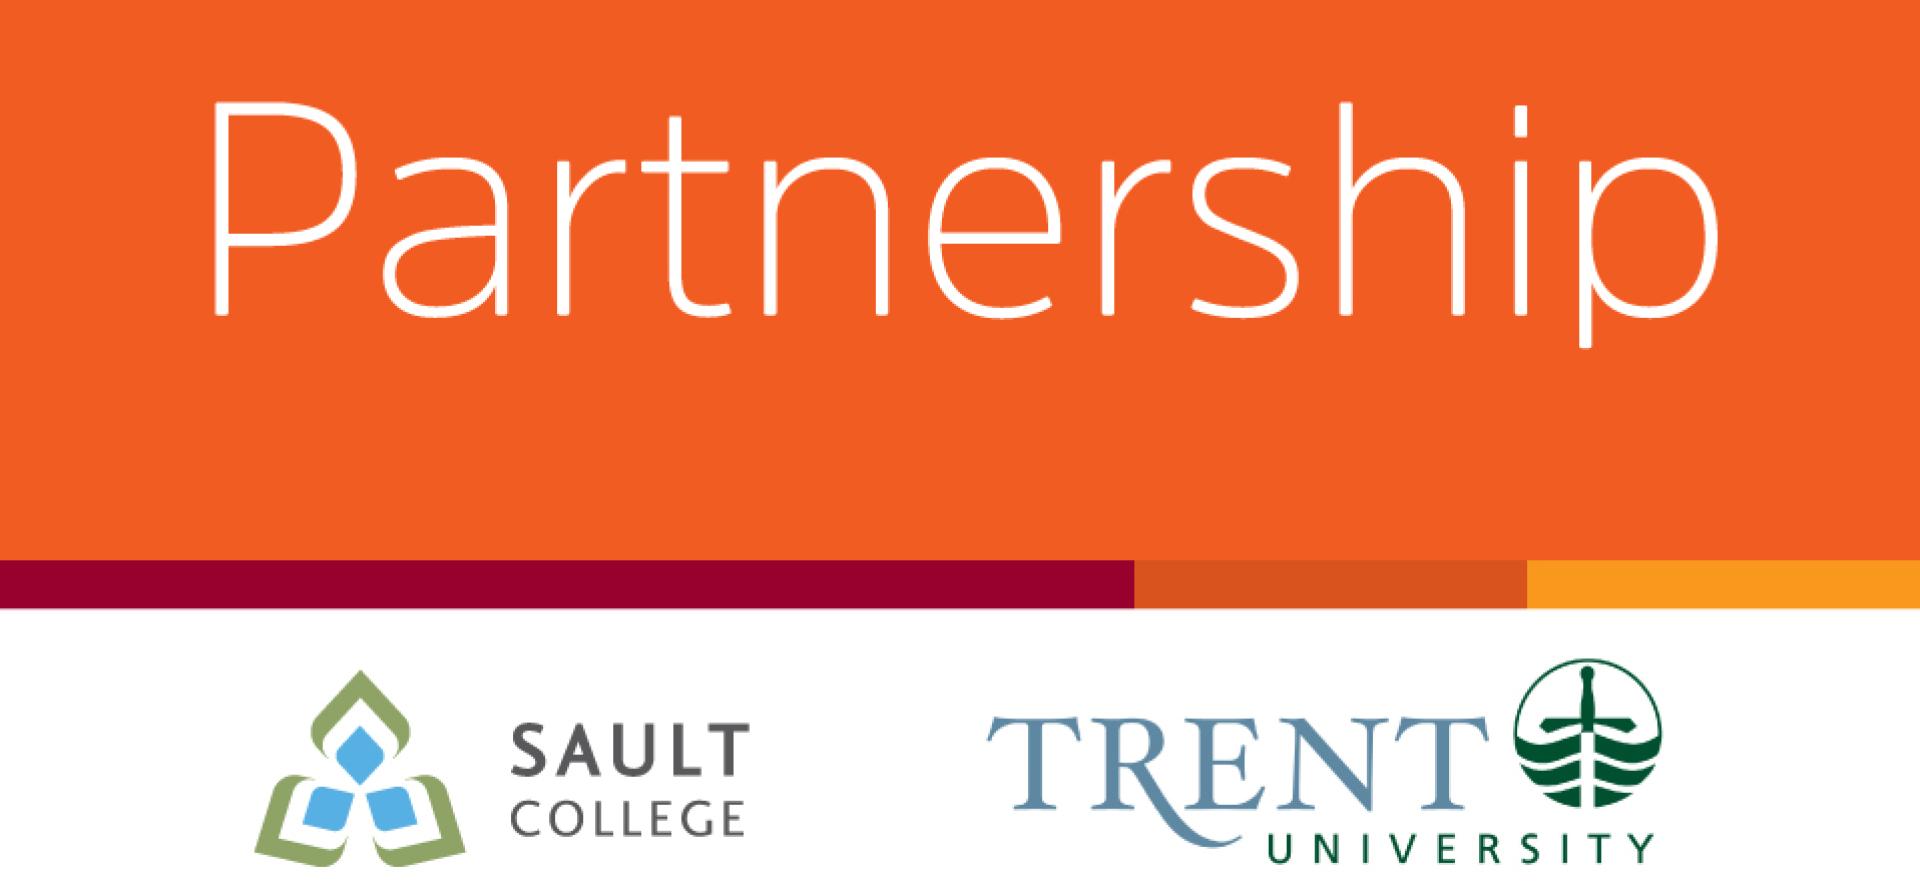 Sault College and Trent University Partnership